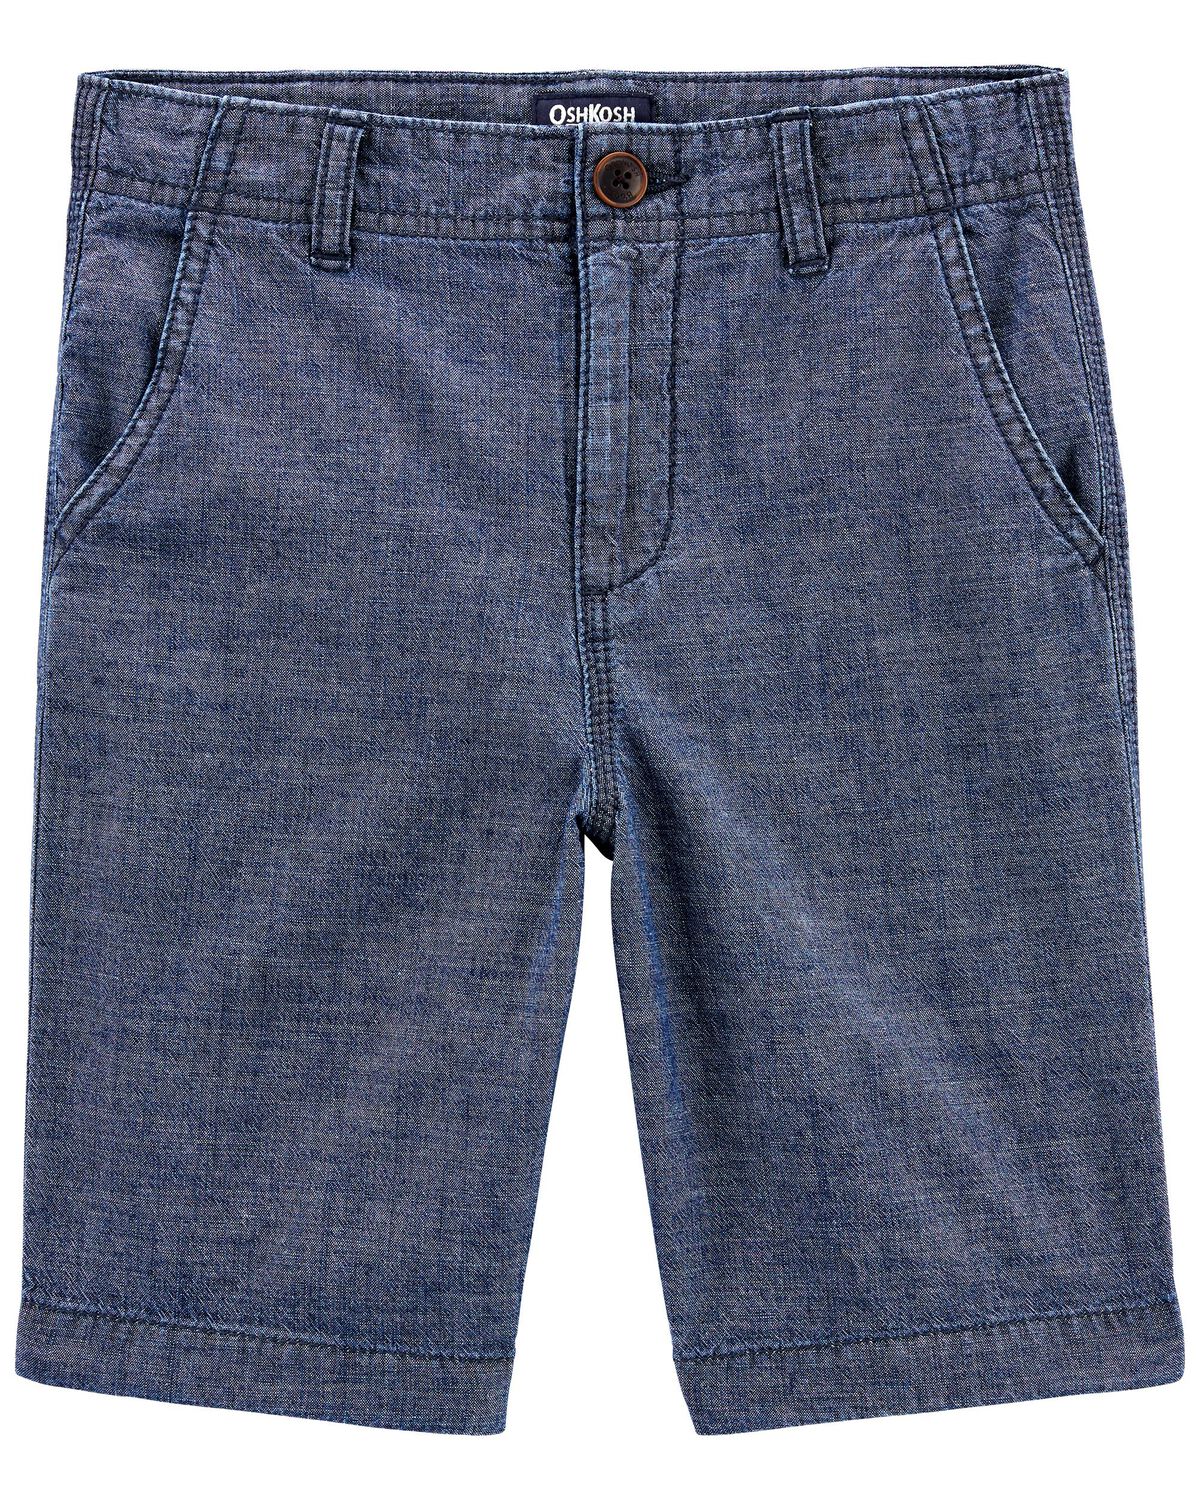 Blue Kid Chambray Shorts | carters.com